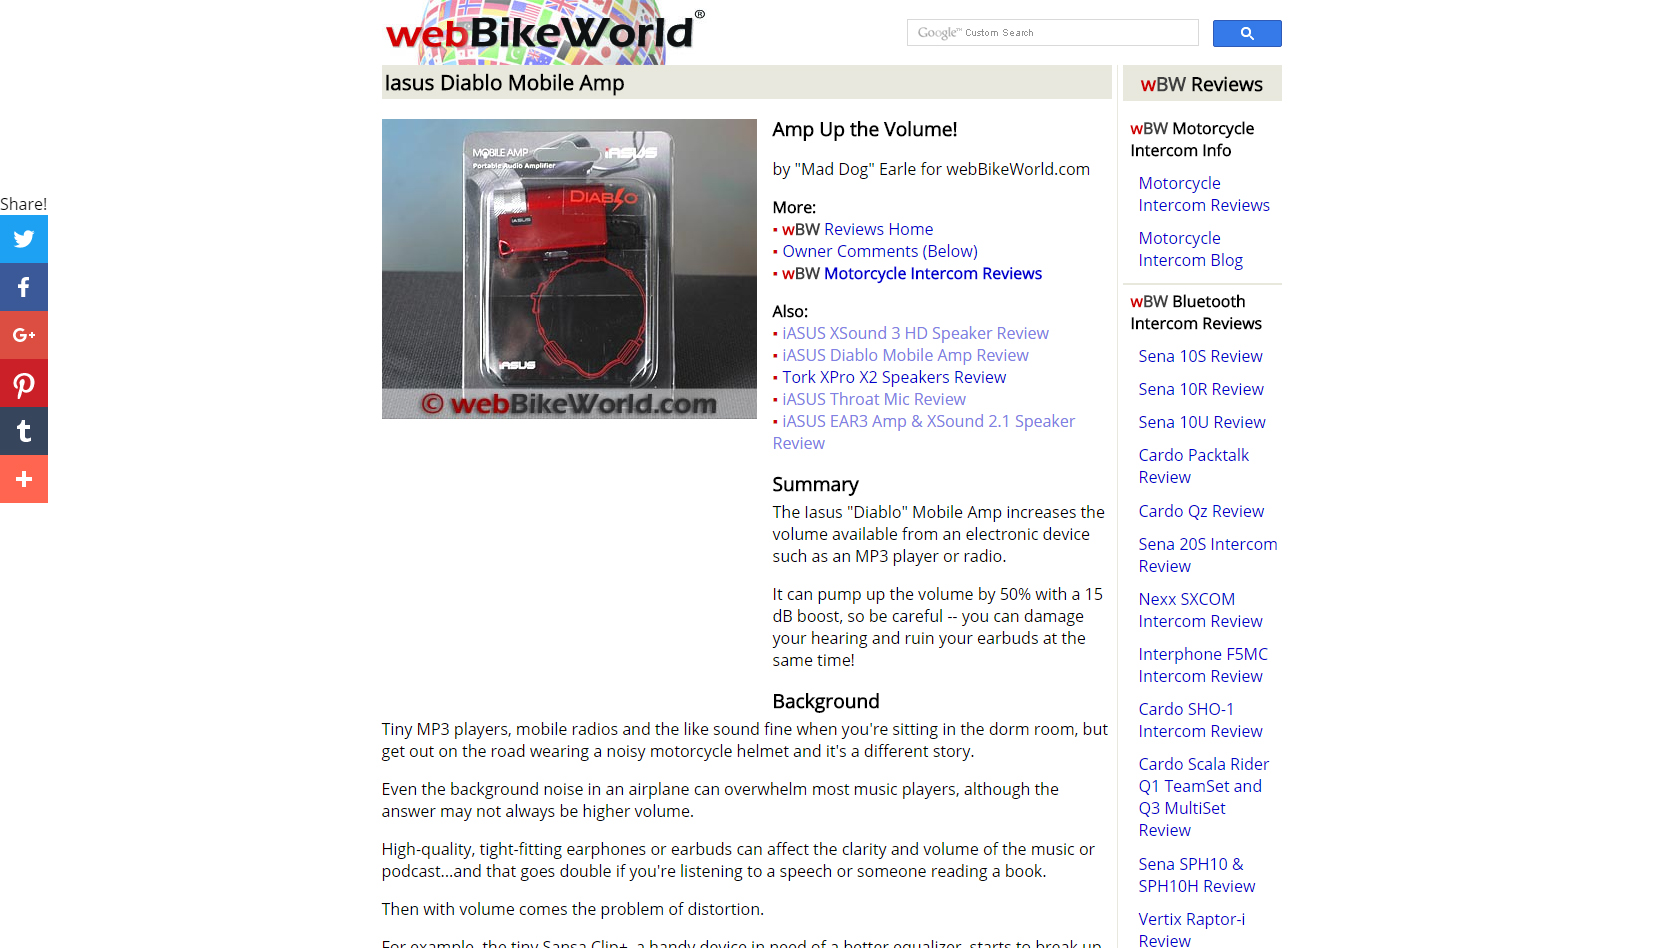 Diablo Mobile Amp on webBIKEWORLD